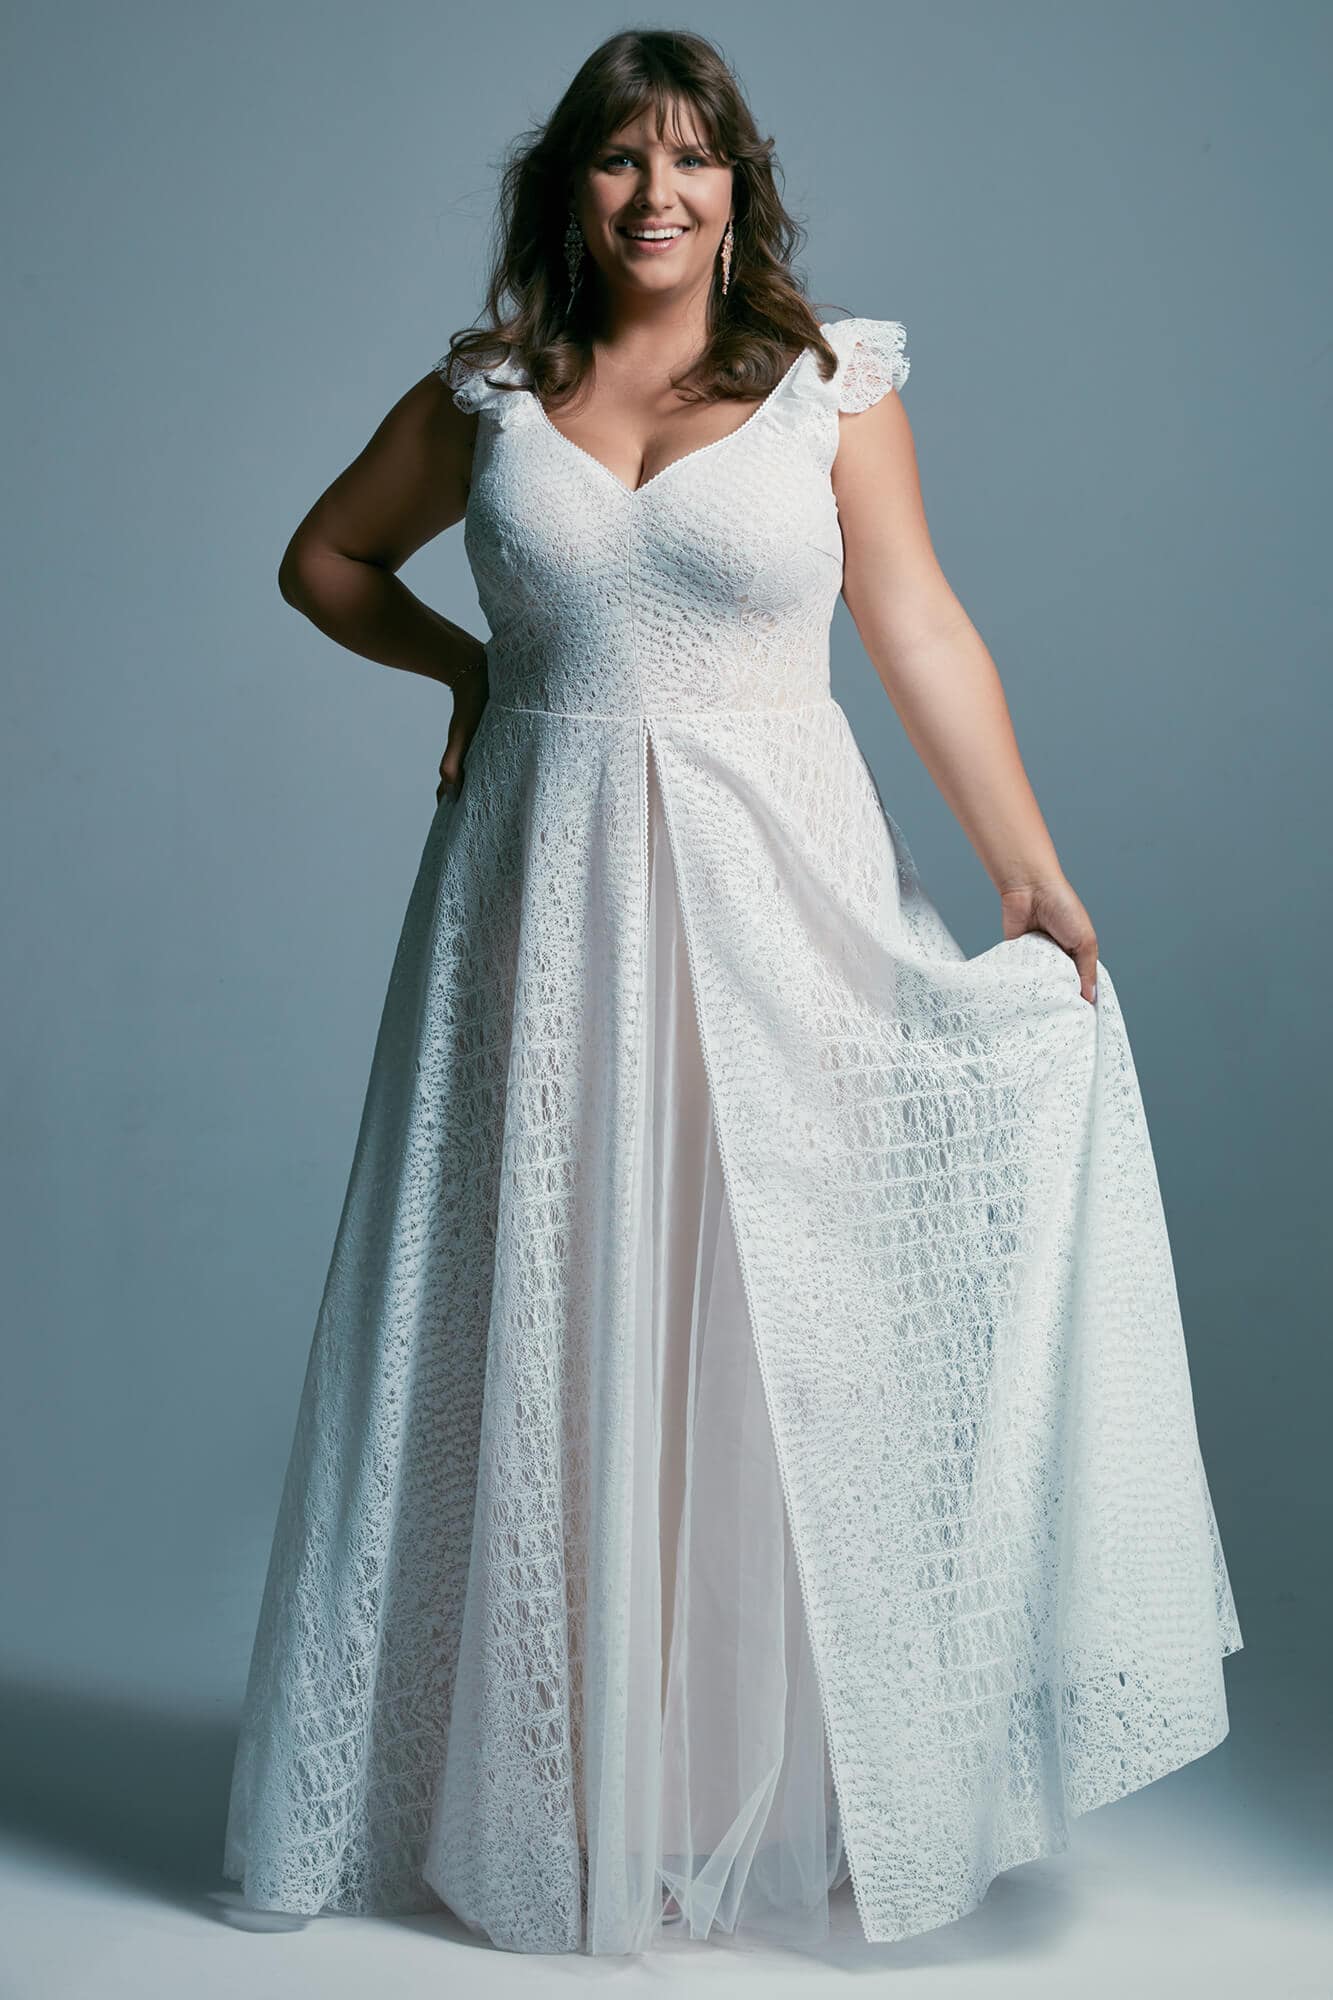 Plus size slimming lace wedding dress Santorini 4 plus size